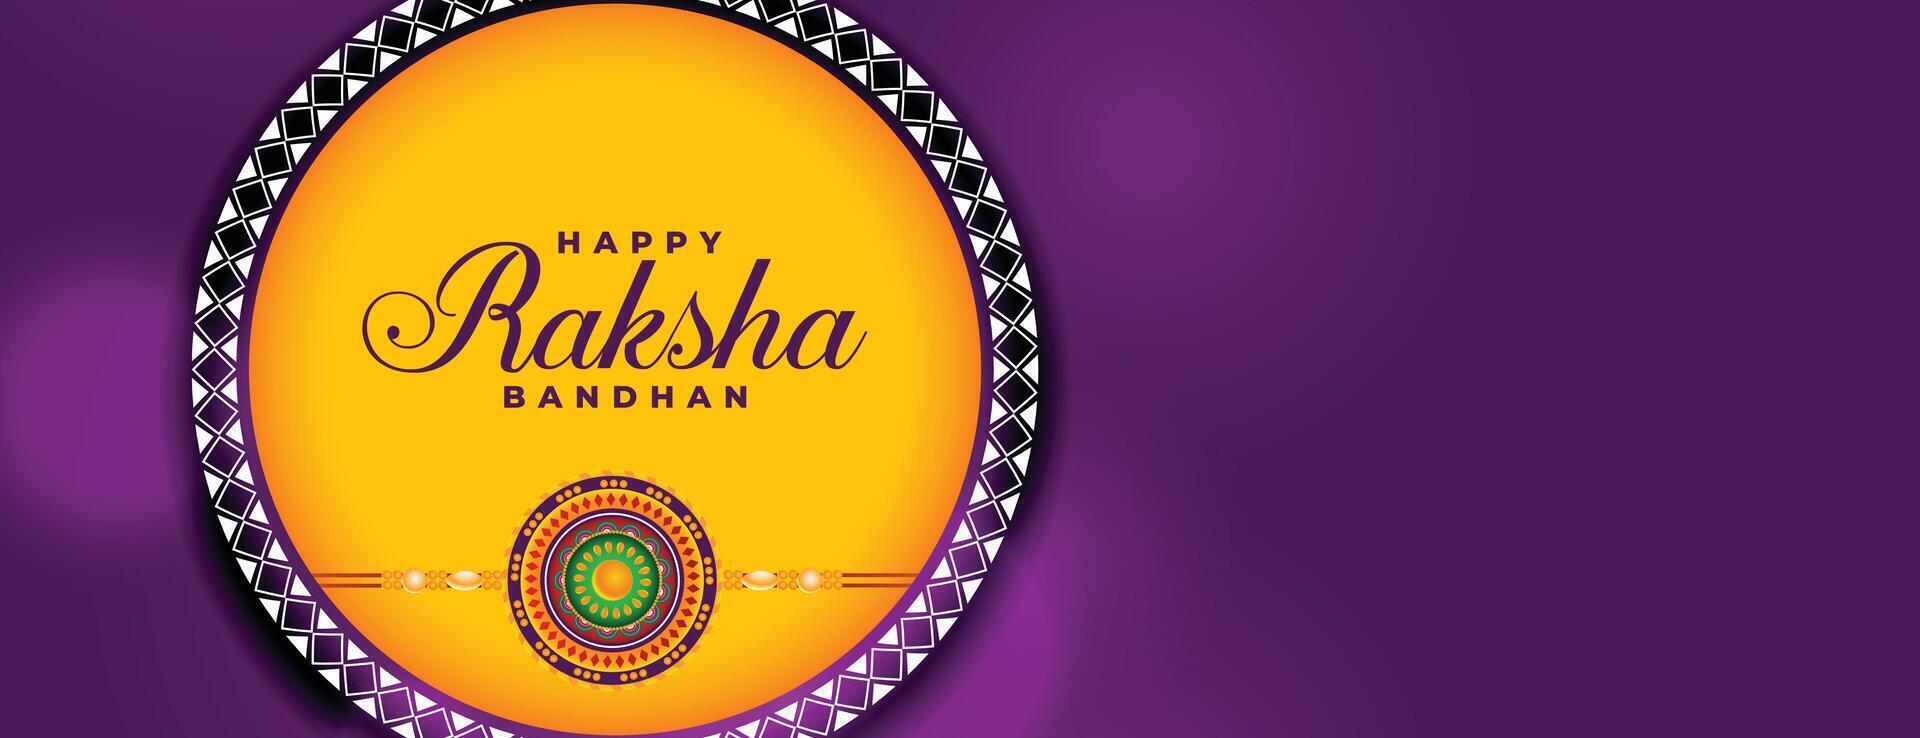 contento Raksha bandhan indiano Festival largo bandiera design vettore